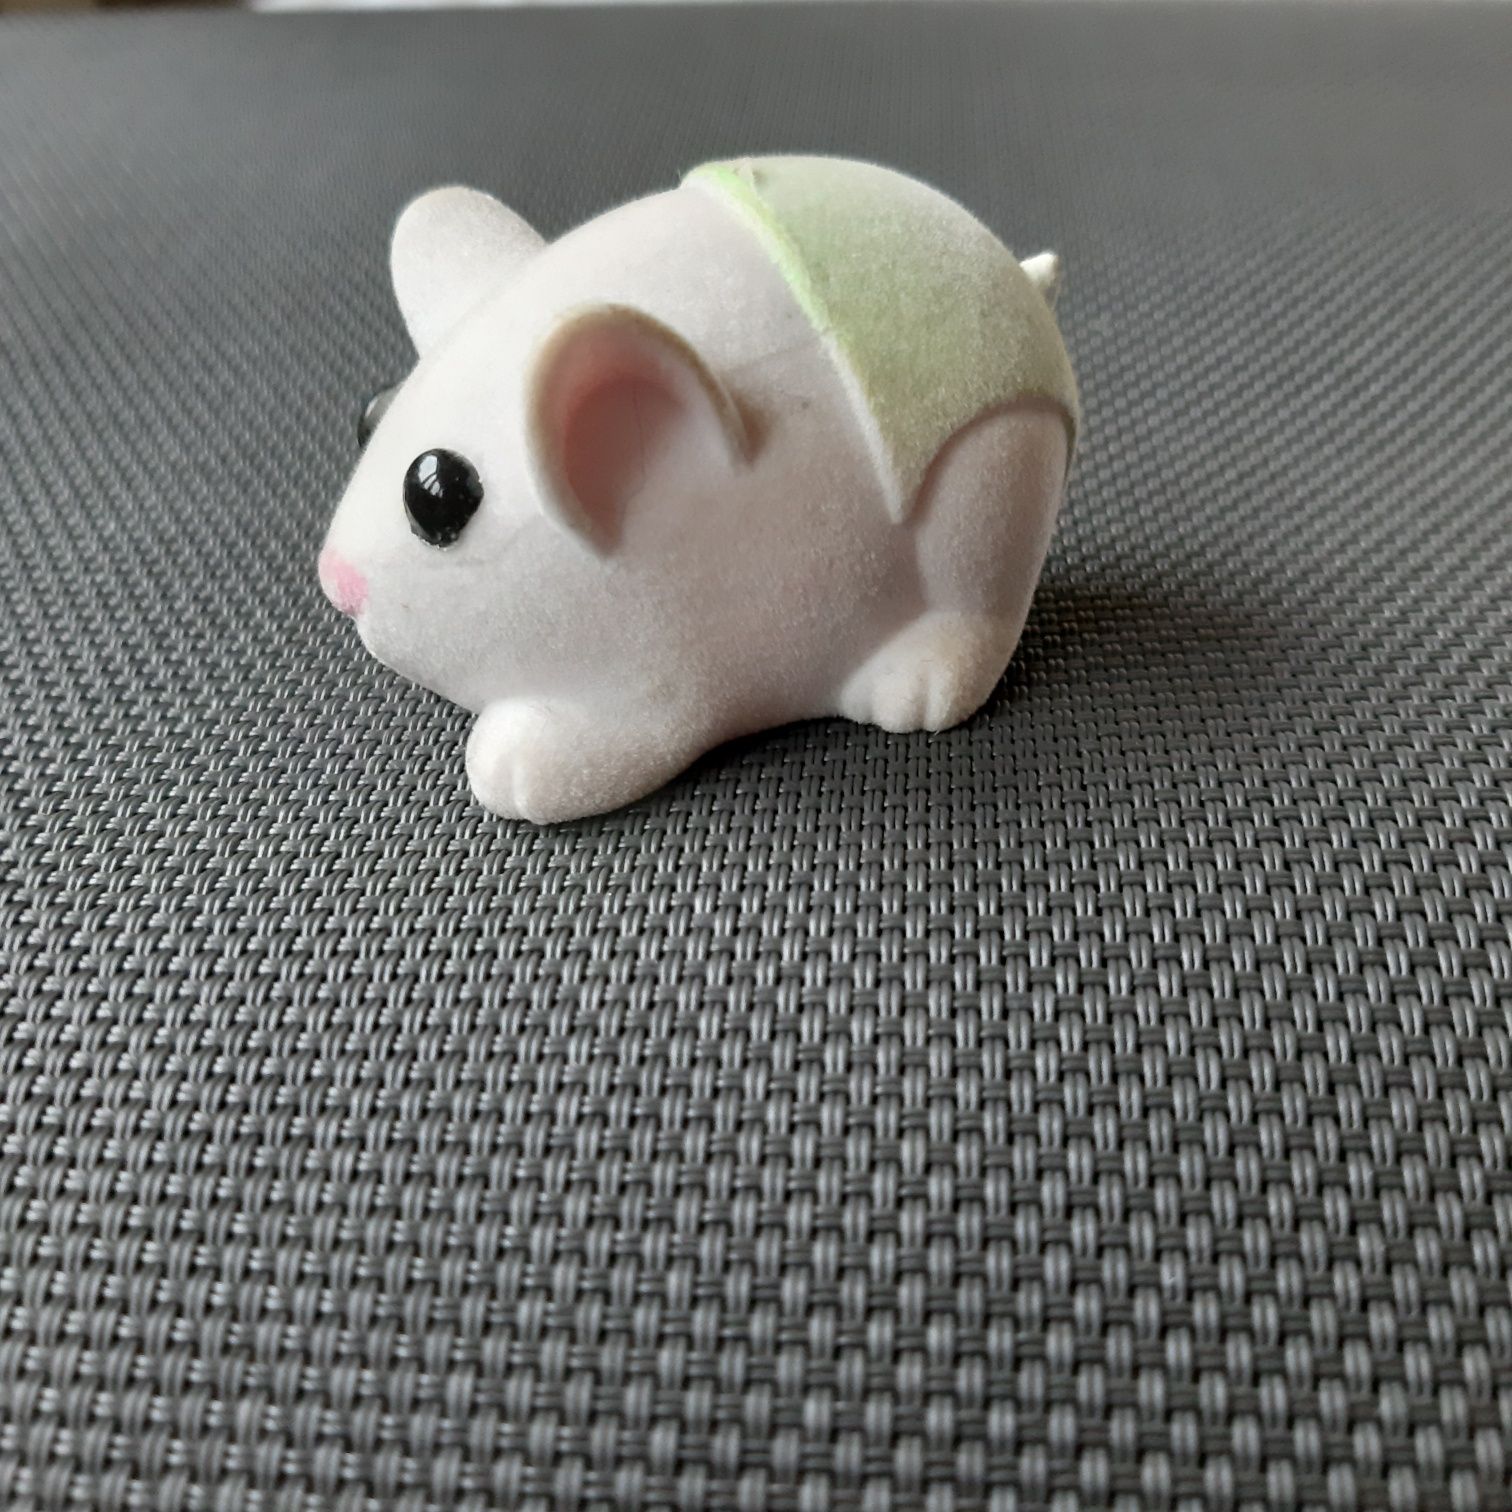 Mysz chomik myszka biała Zhu zhu pets unikat zabawka figurka